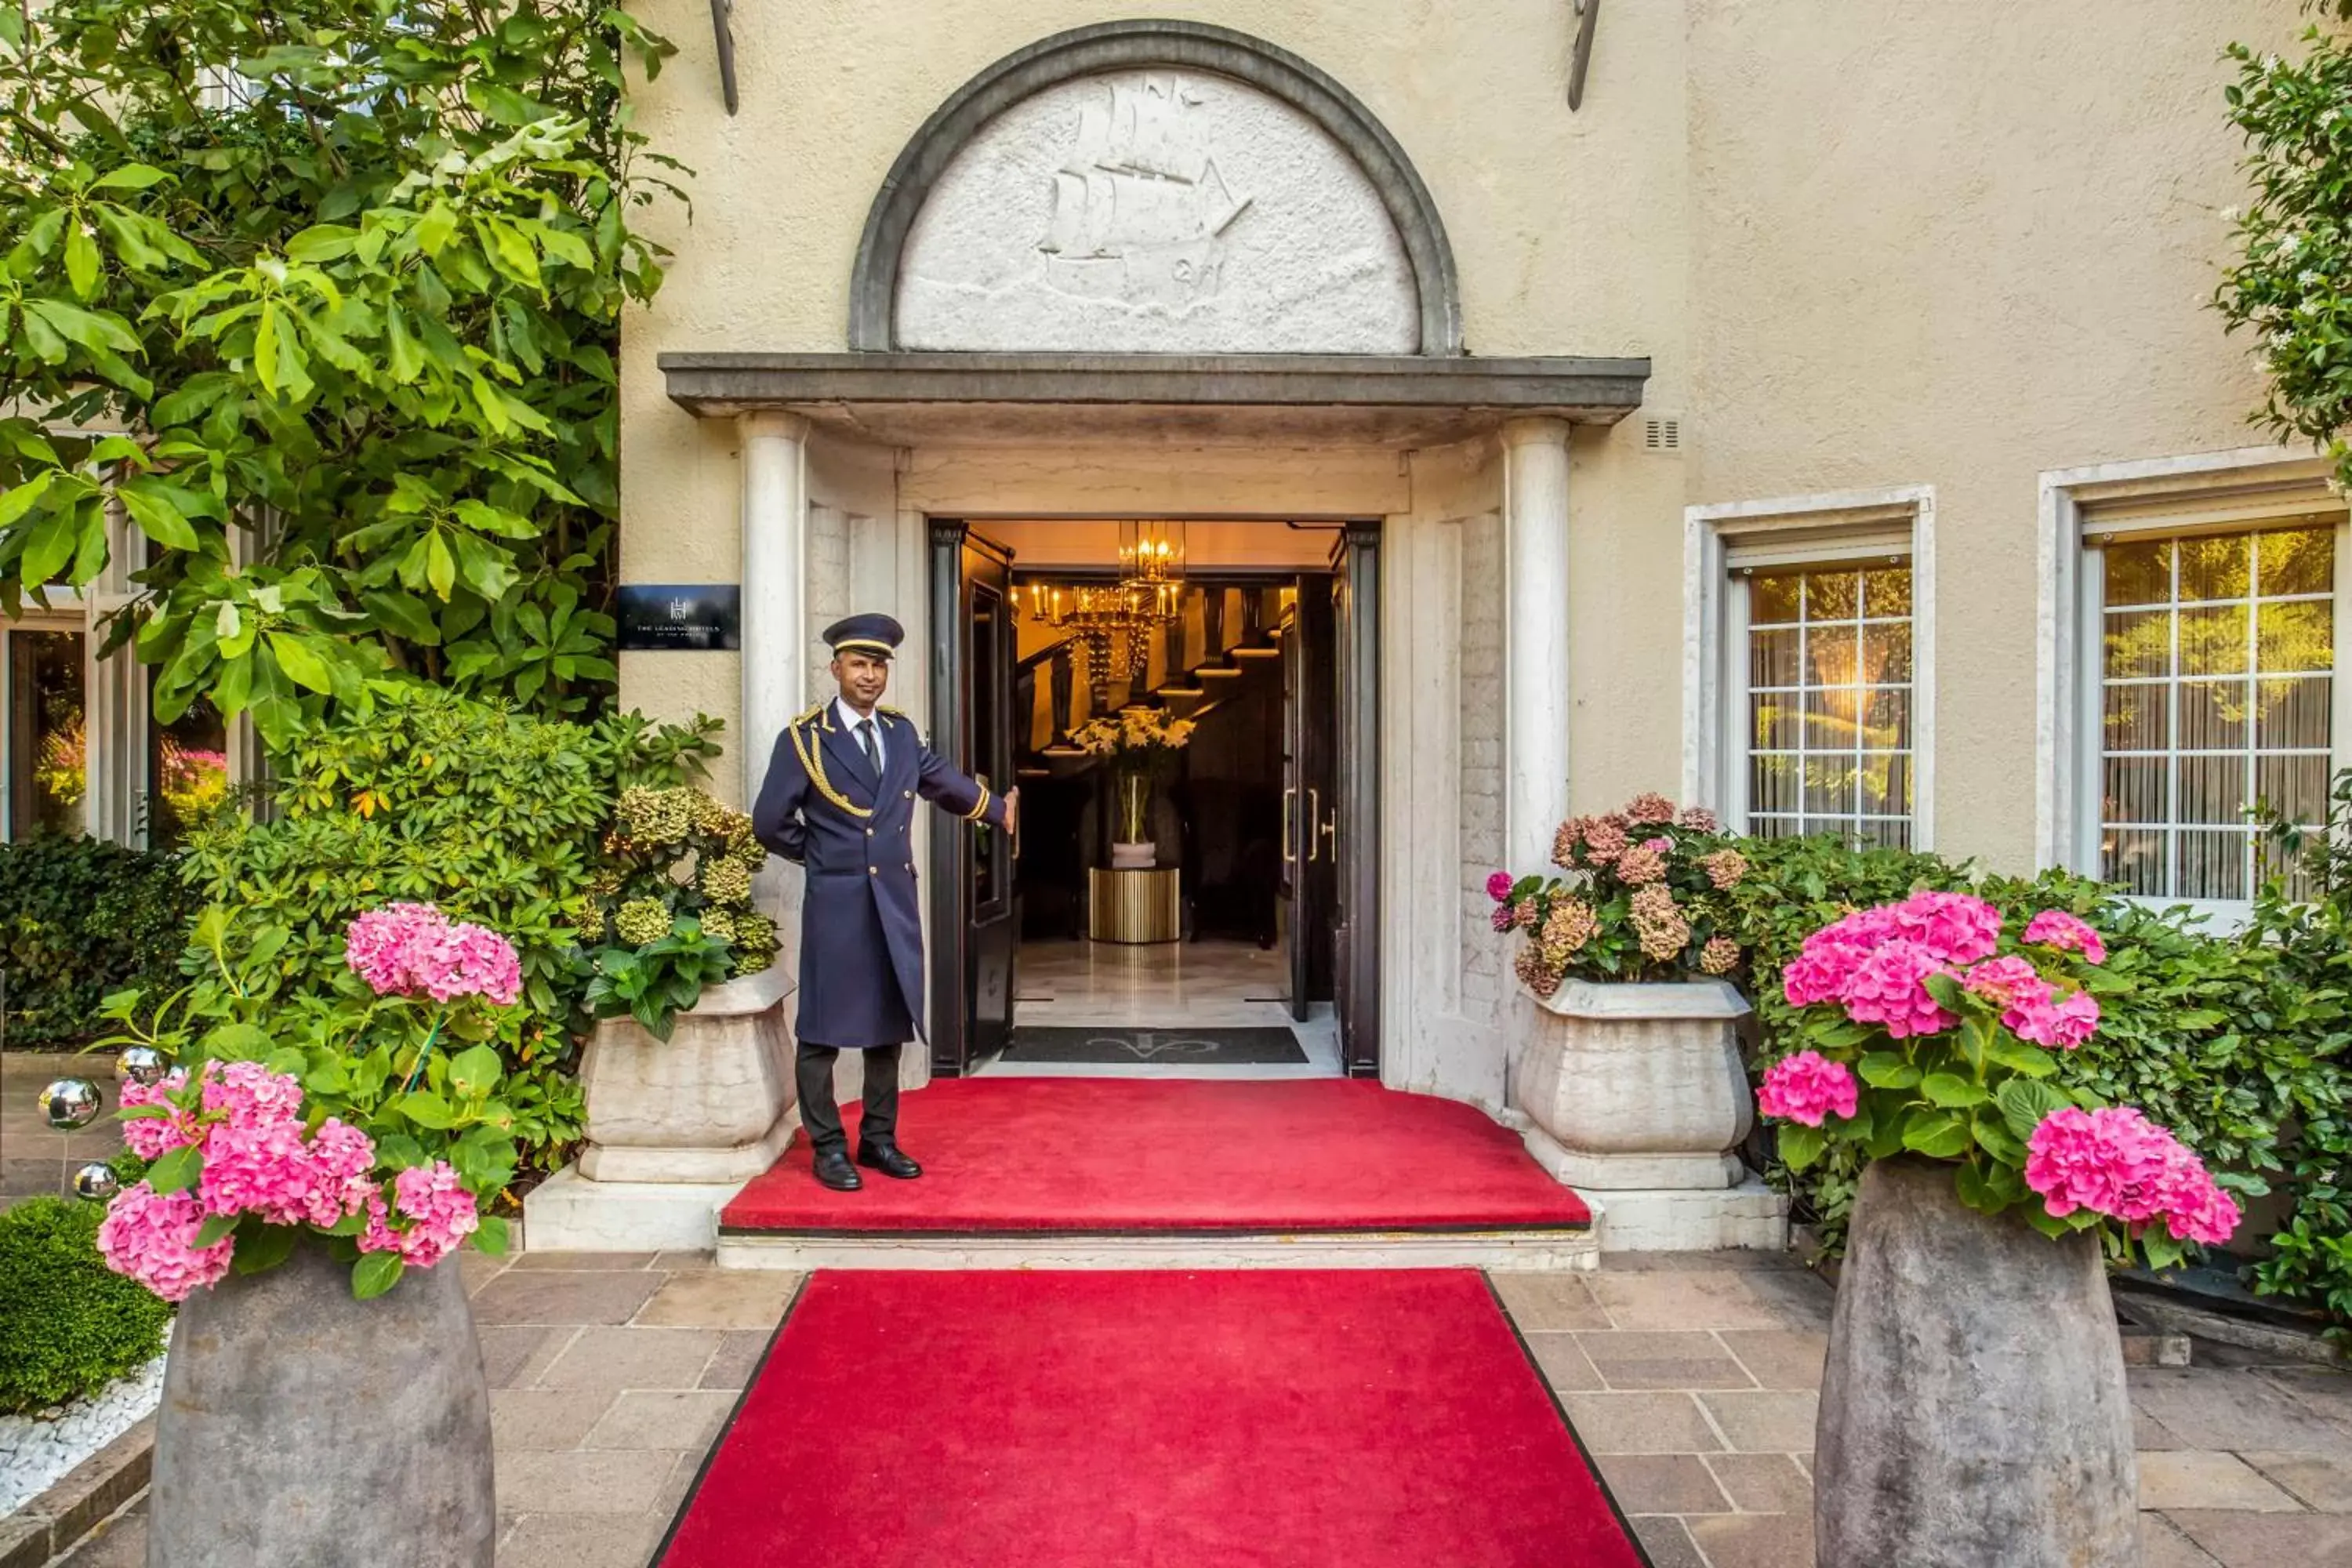 Facade/Entrance in Villa Eden a member of Leading Hotels of the World